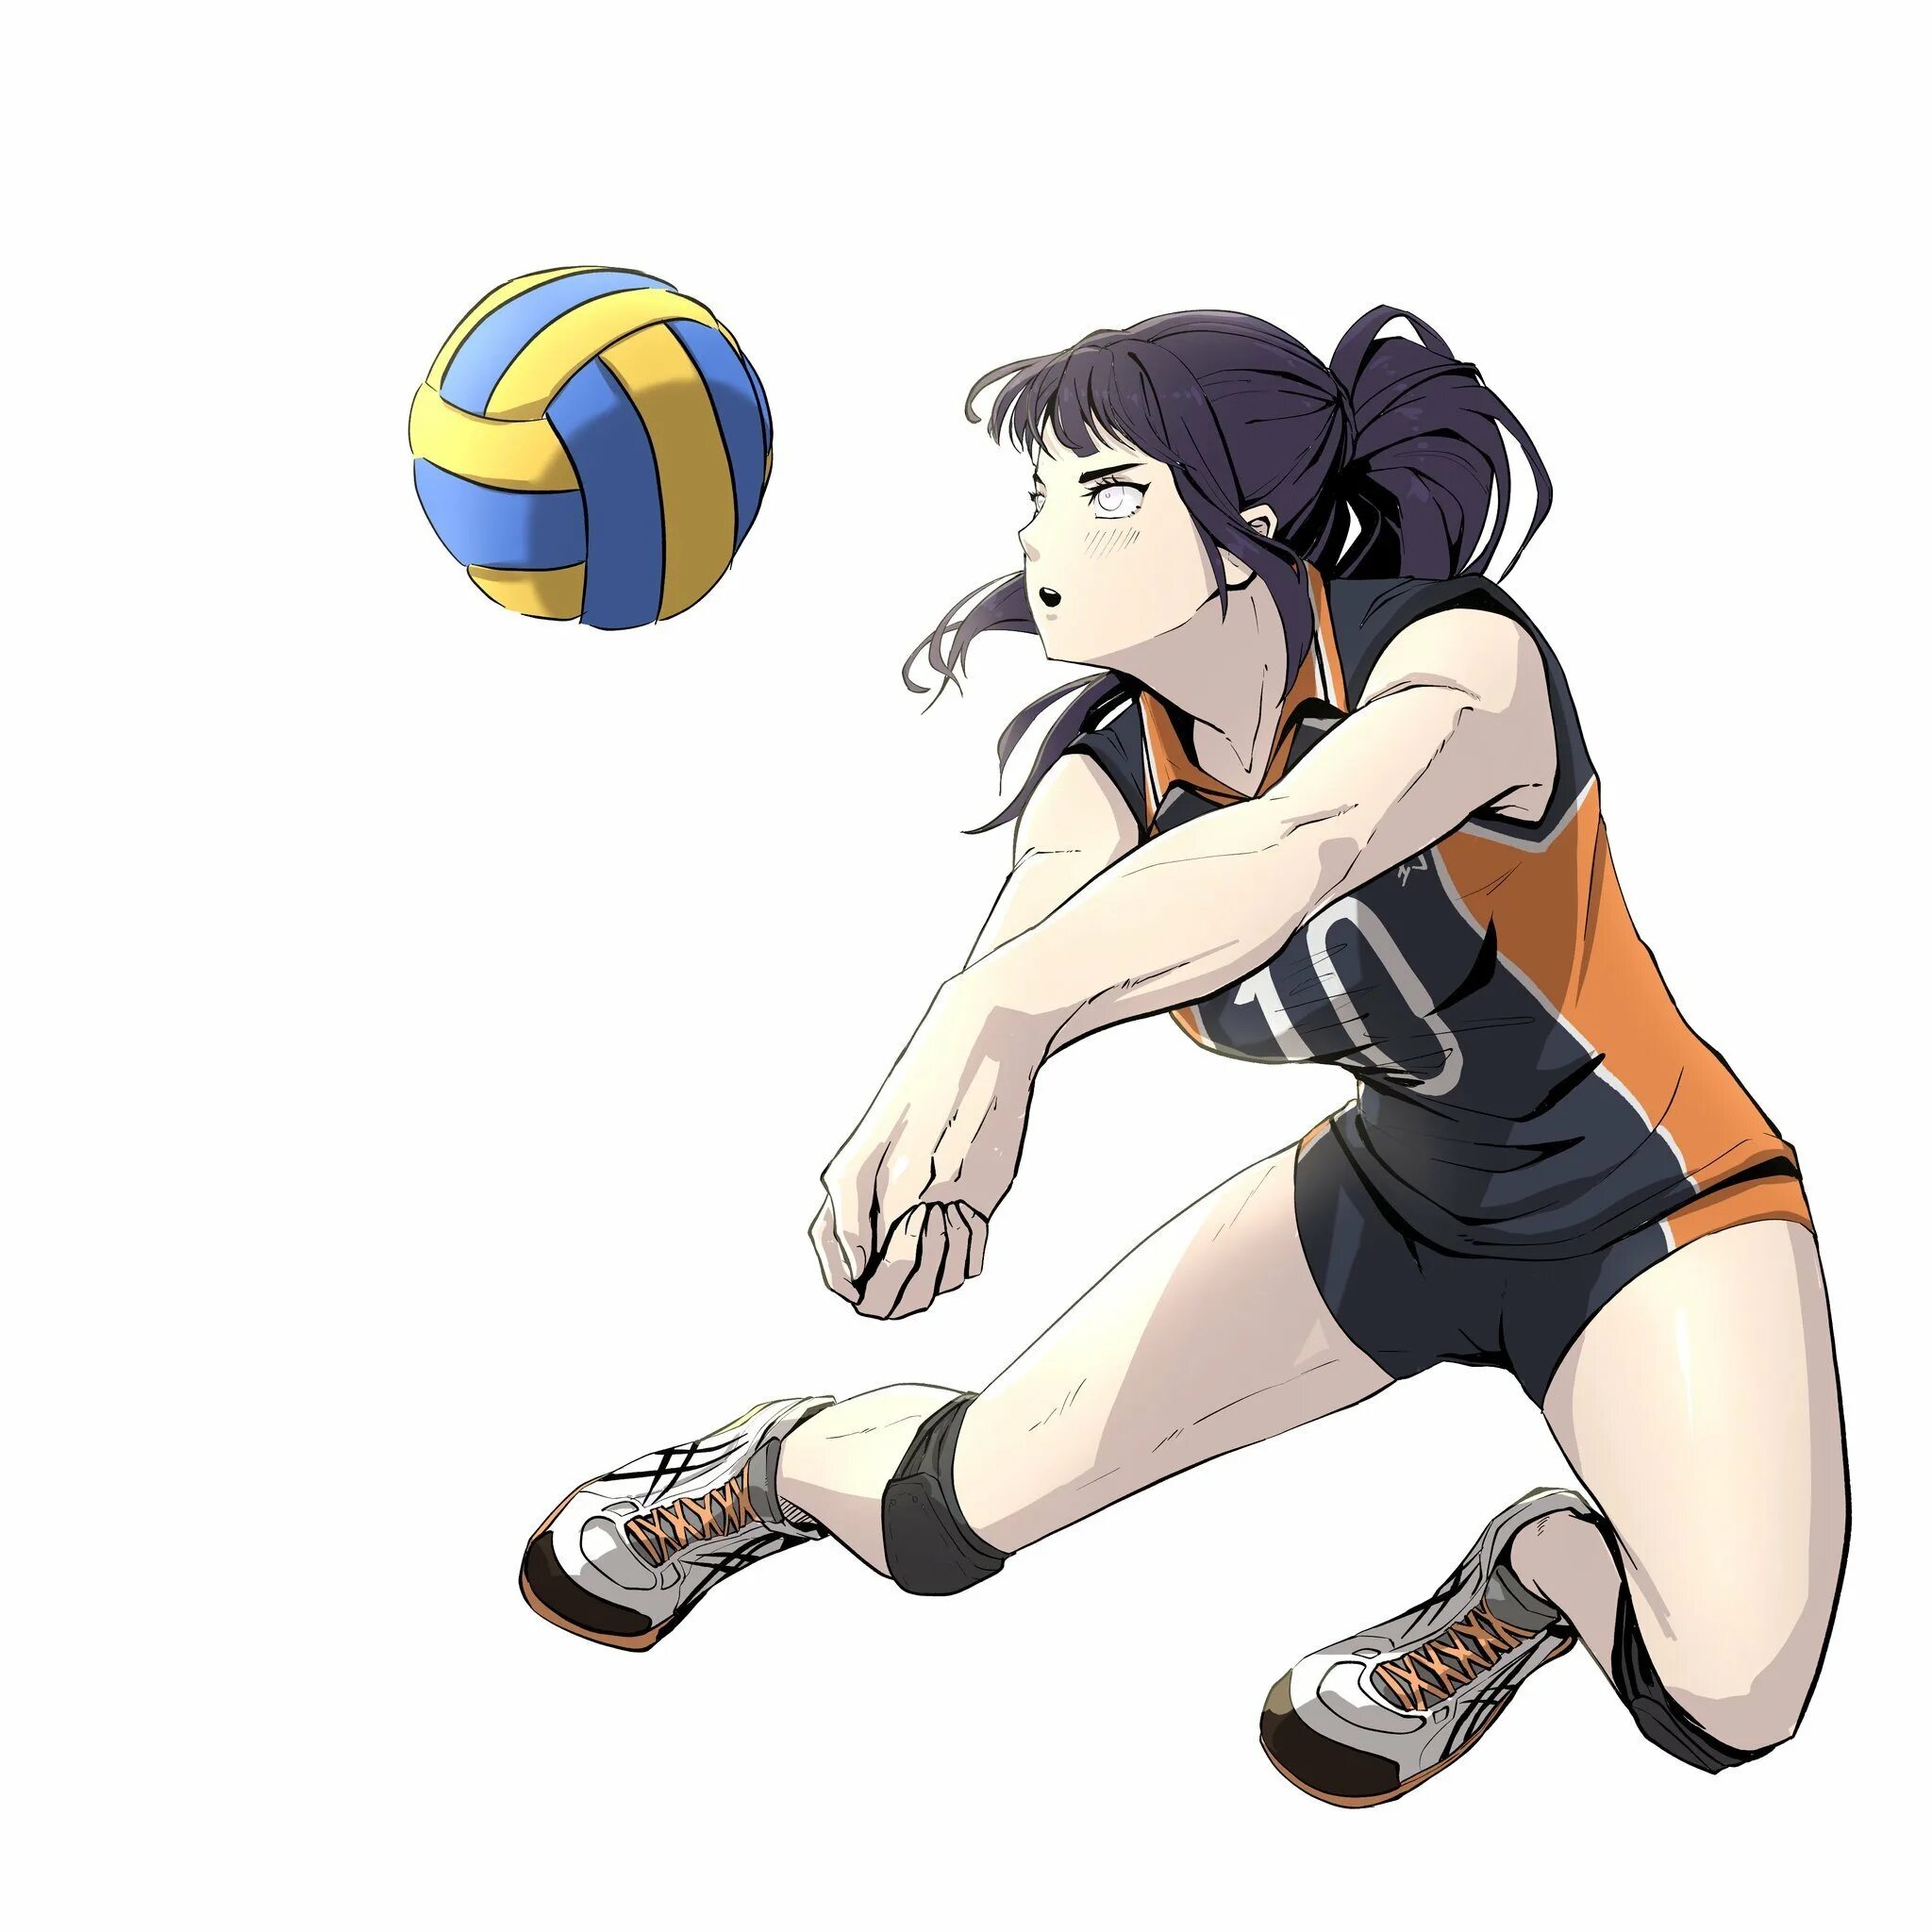 Фигура волейбол. Хината Сан волейбол. Аканэ Чан волейбол. Волейбольный мяч аниме волейбол. Волейбольный мяч из аниме Haikyuu.